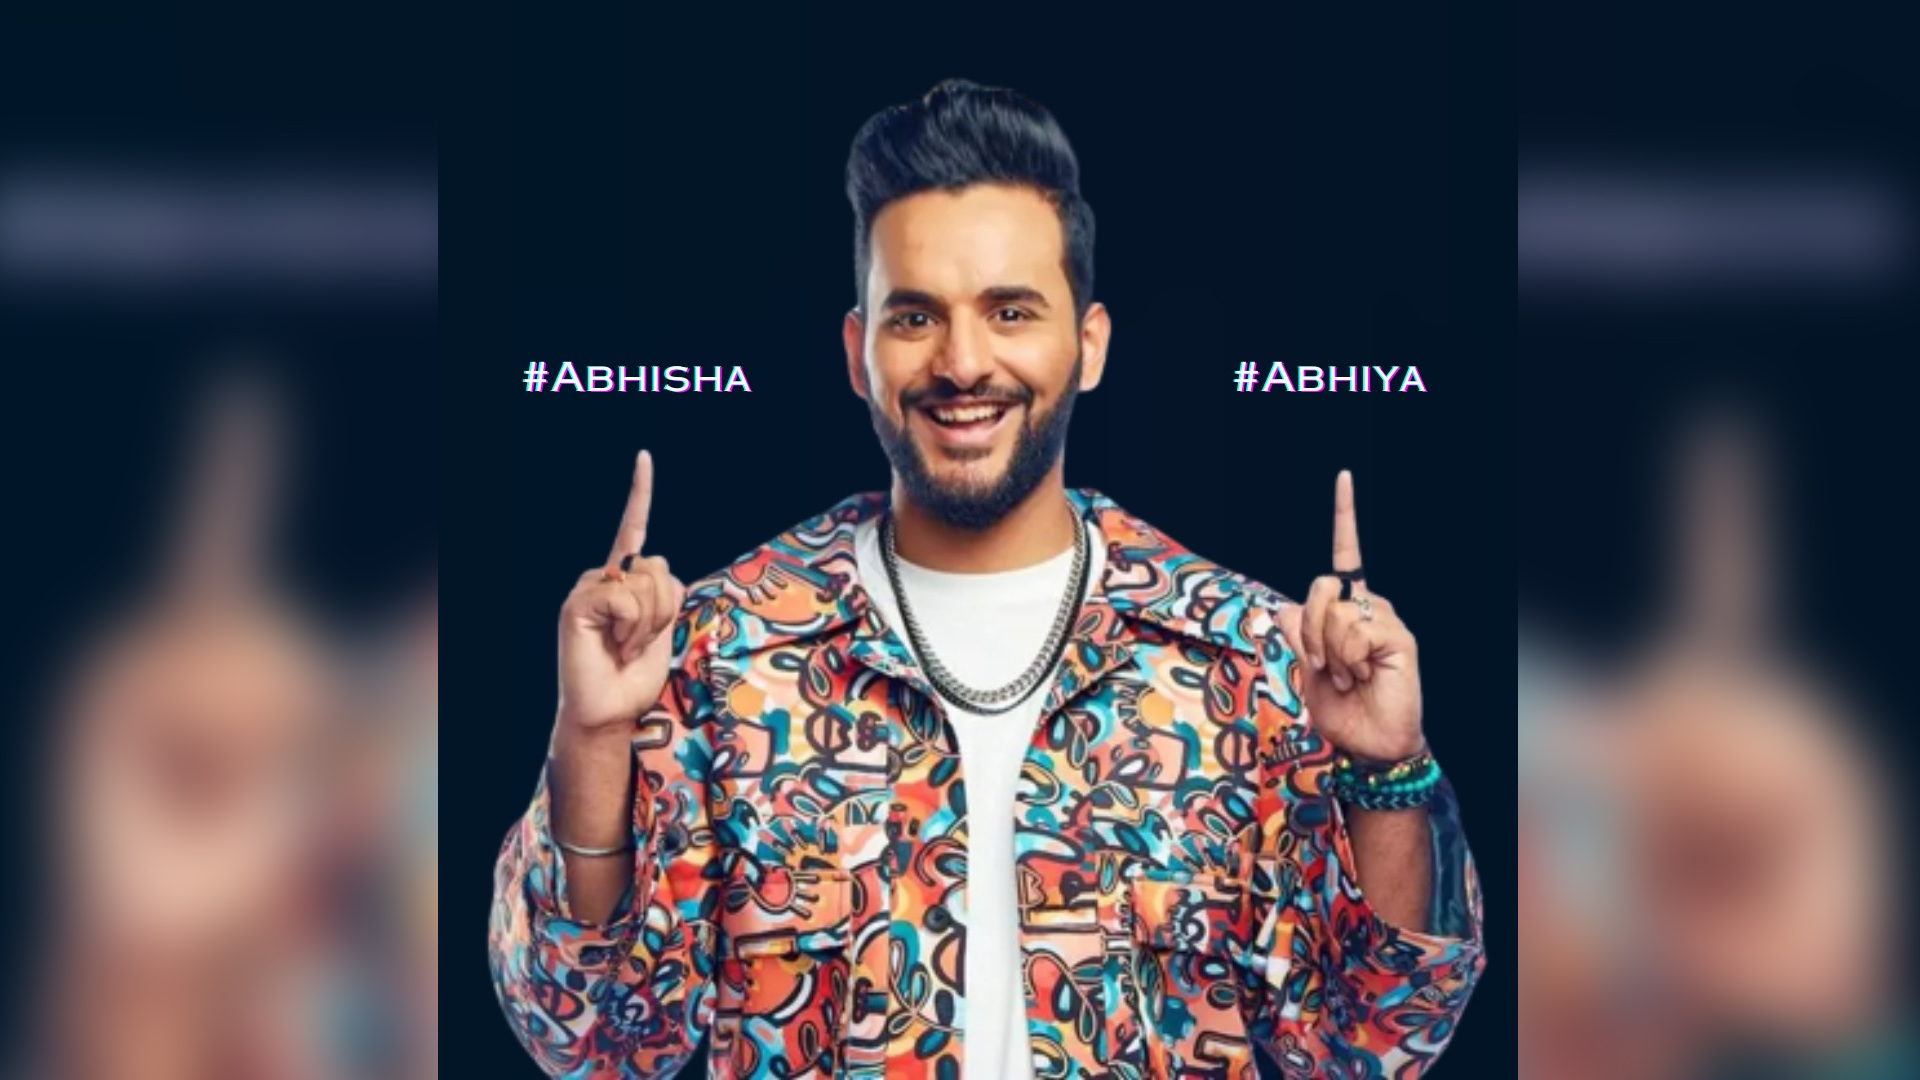 “I feel #Abhisha is more genuine than #Abhiya” says Abhisek Malhan during JioCinema Live Chat